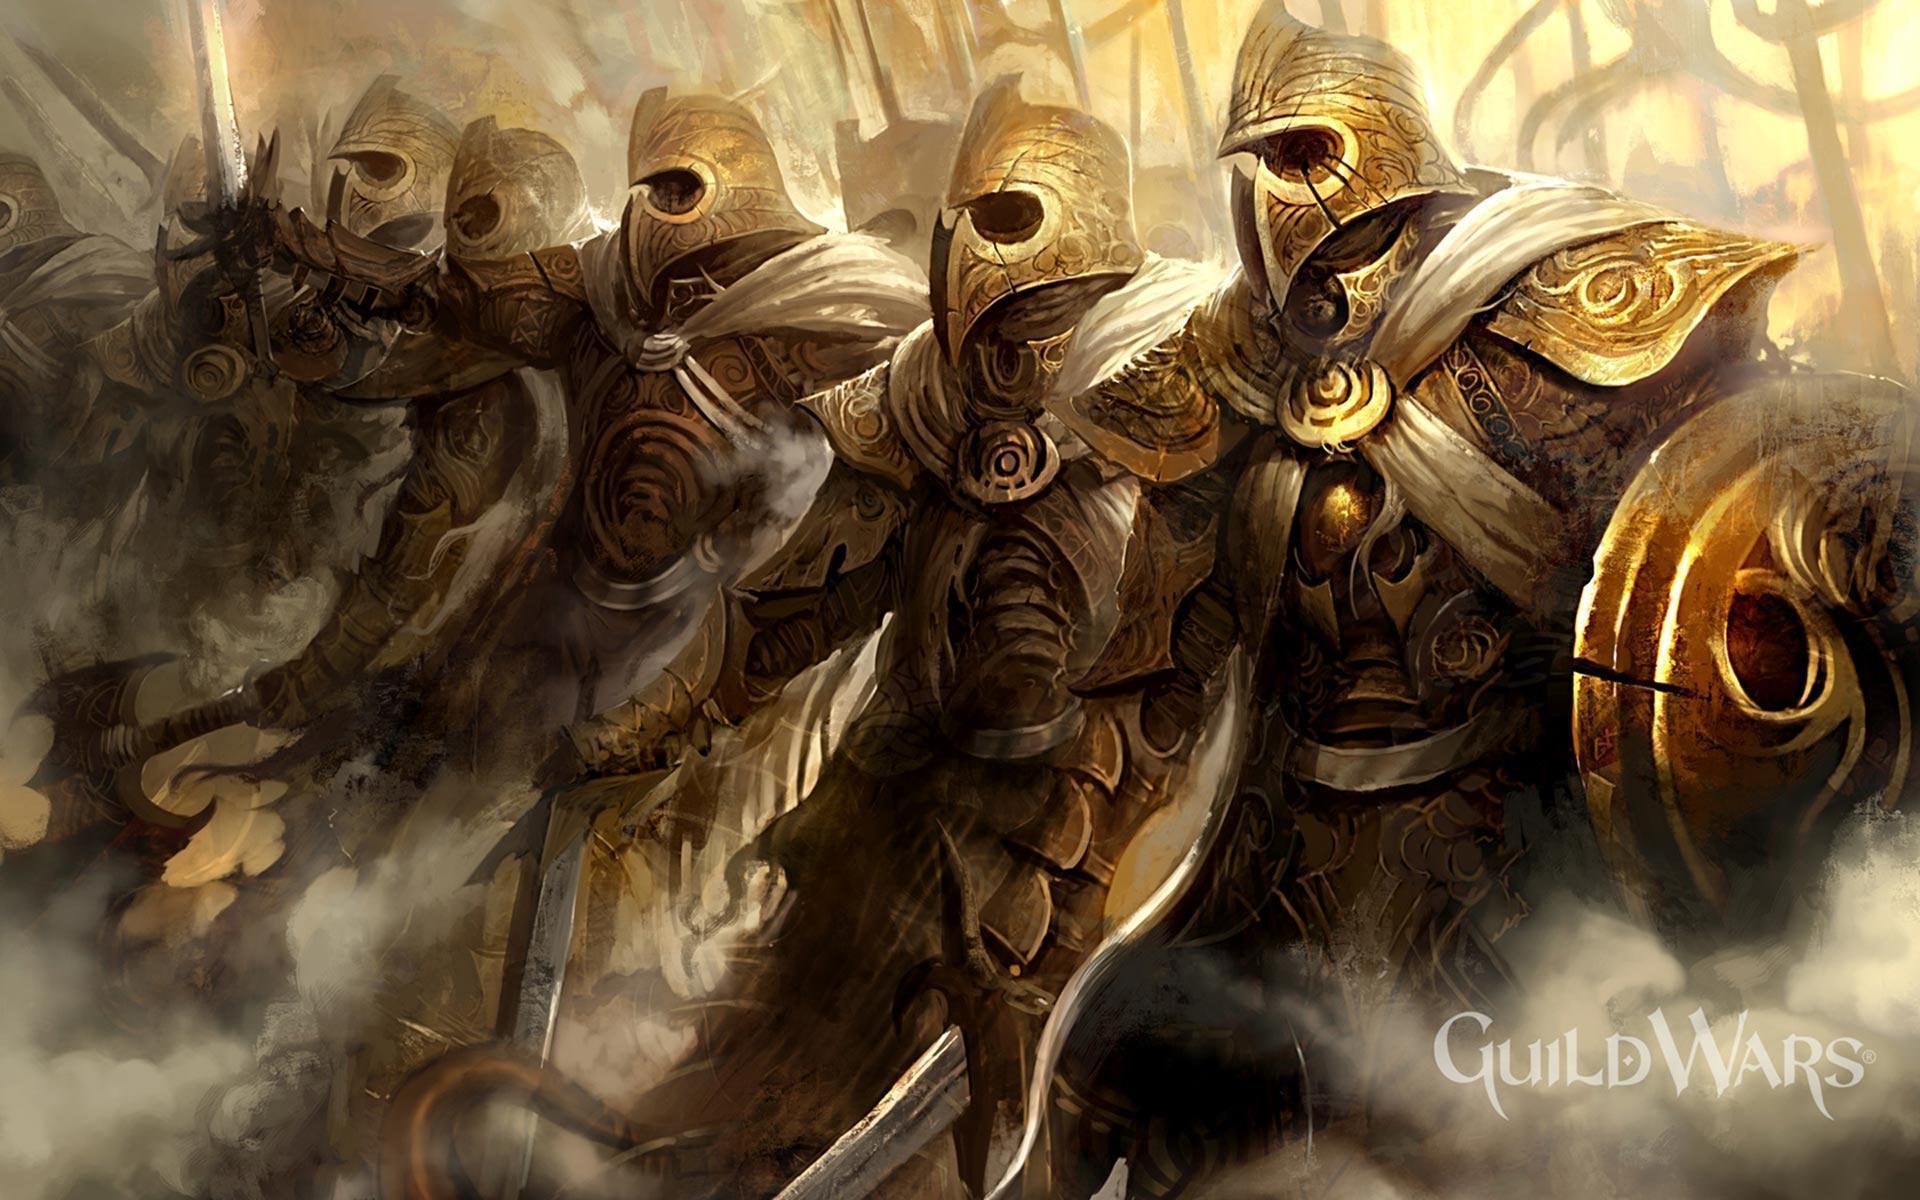 Hd Guild Wars 2 Wallpaper, Desktop Background Wallpaper Pc Games